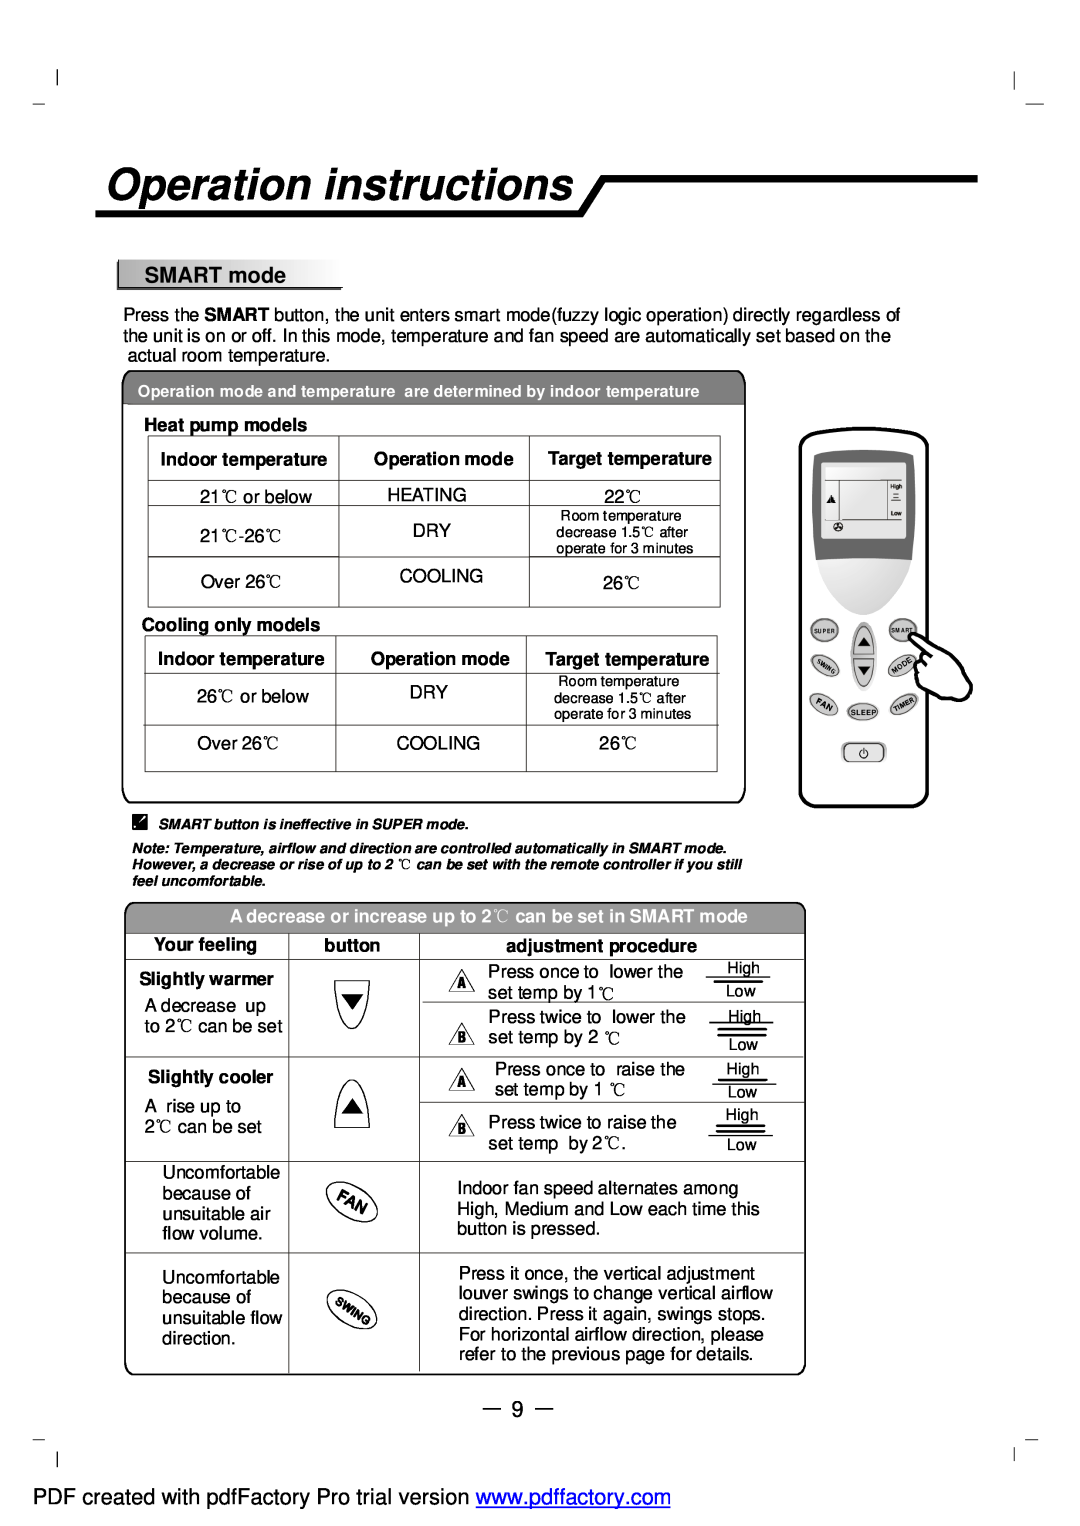 NEC RIH-6867 user manual Operation instructions, SMARTmode 